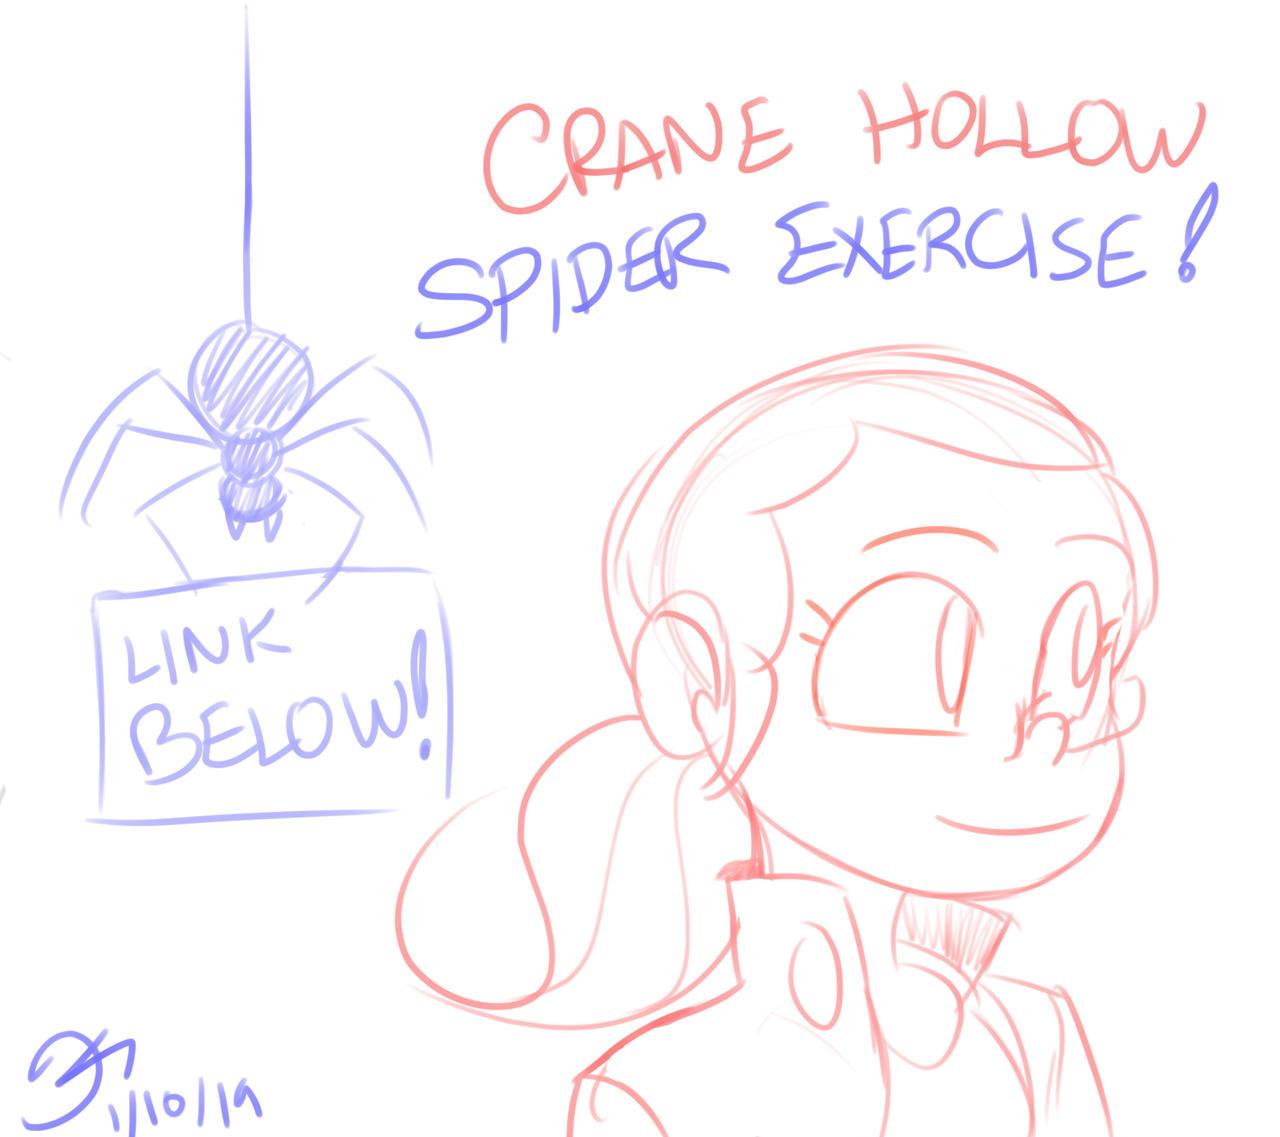 Spider exercises